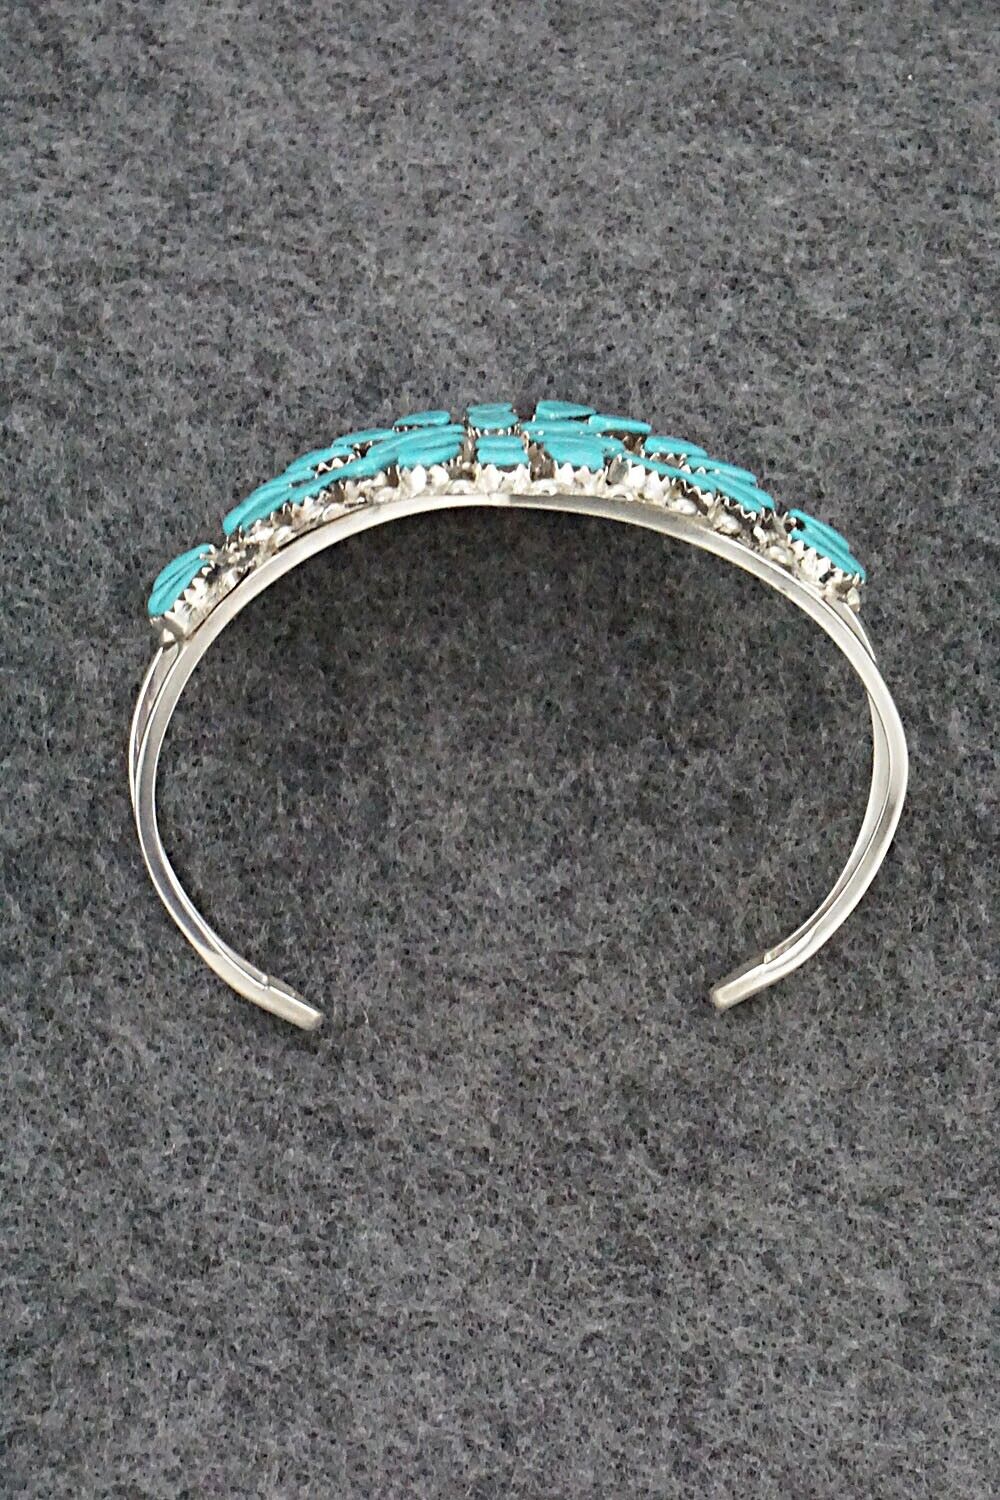 Turquoise & Sterling Silver Bracelet - Evangeline Tsabetsaye